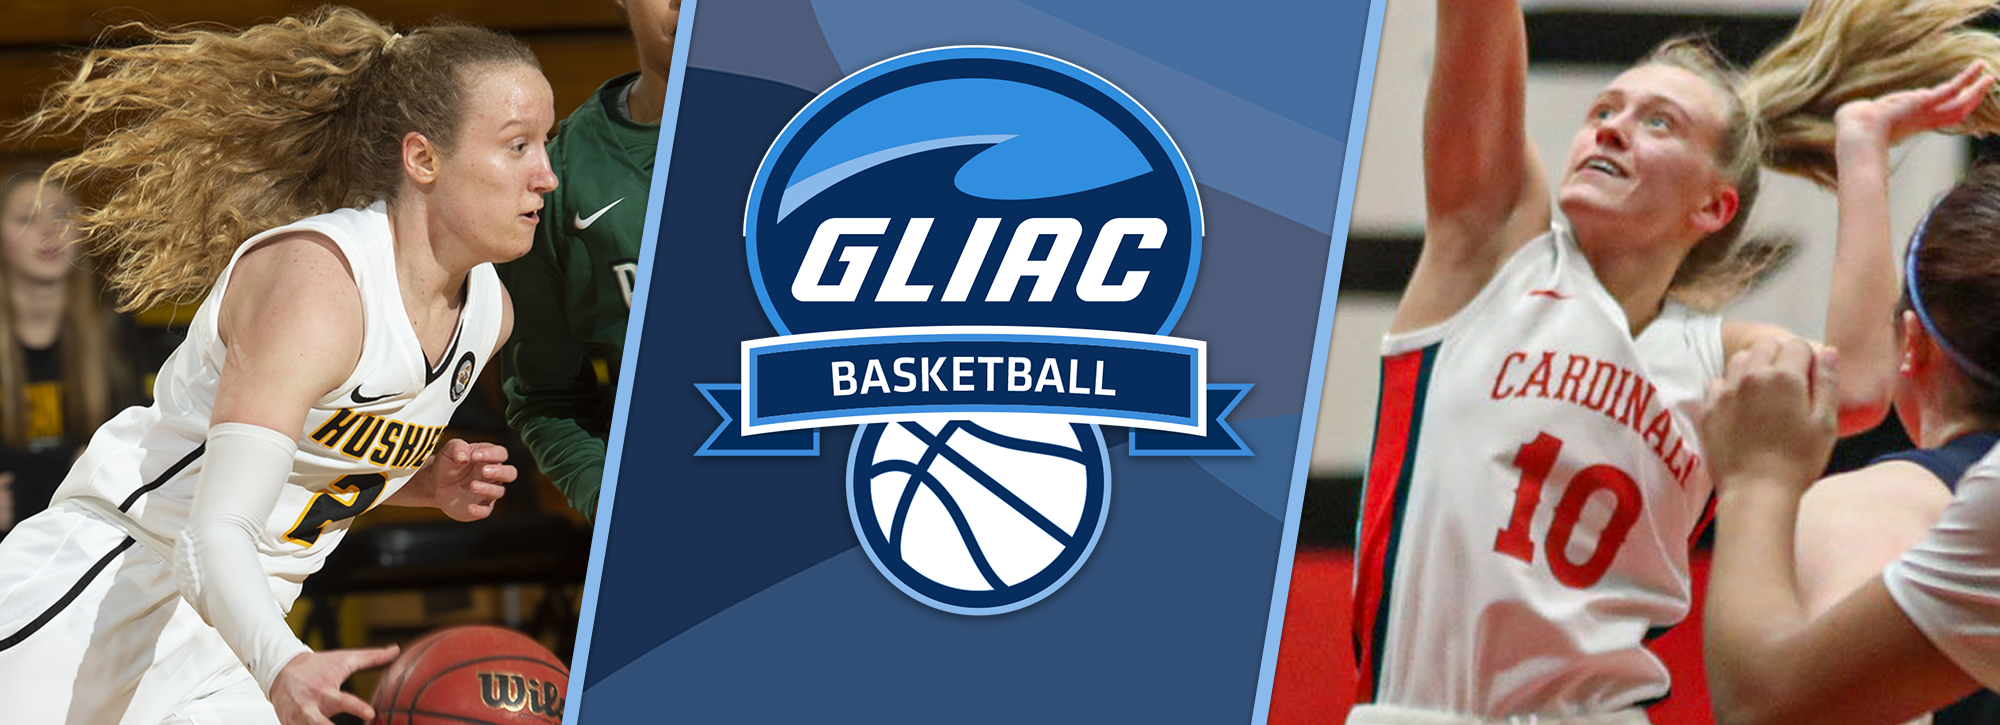 Michigan Tech's Mackay and SVSU's Zarycki recognized with GLIAC Women's Basketball Players of the Week honors